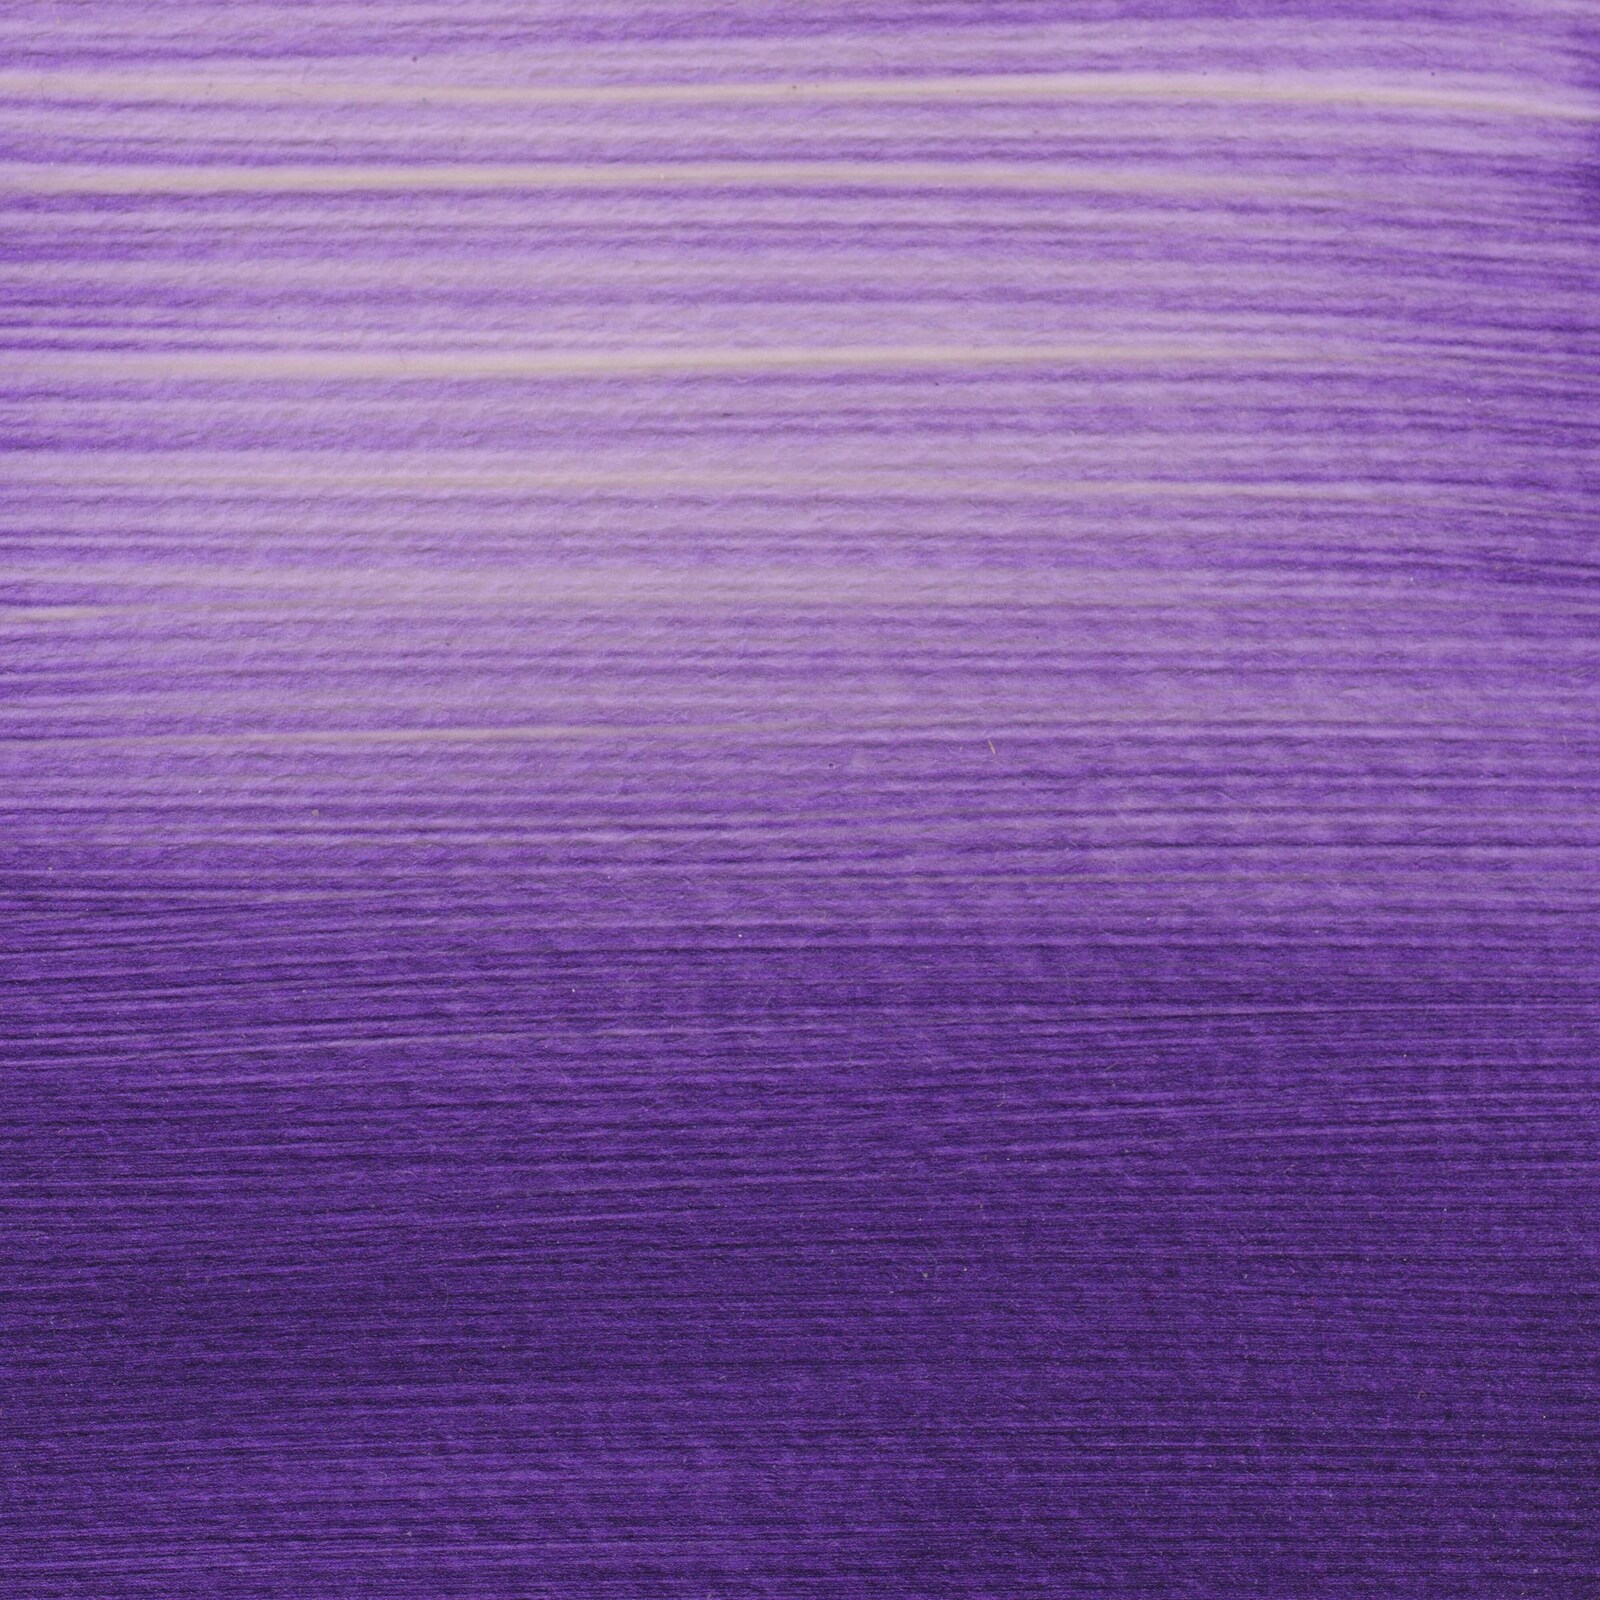 Amsterdam Standard Acrylic Paint 120Ml-Pearl Violet